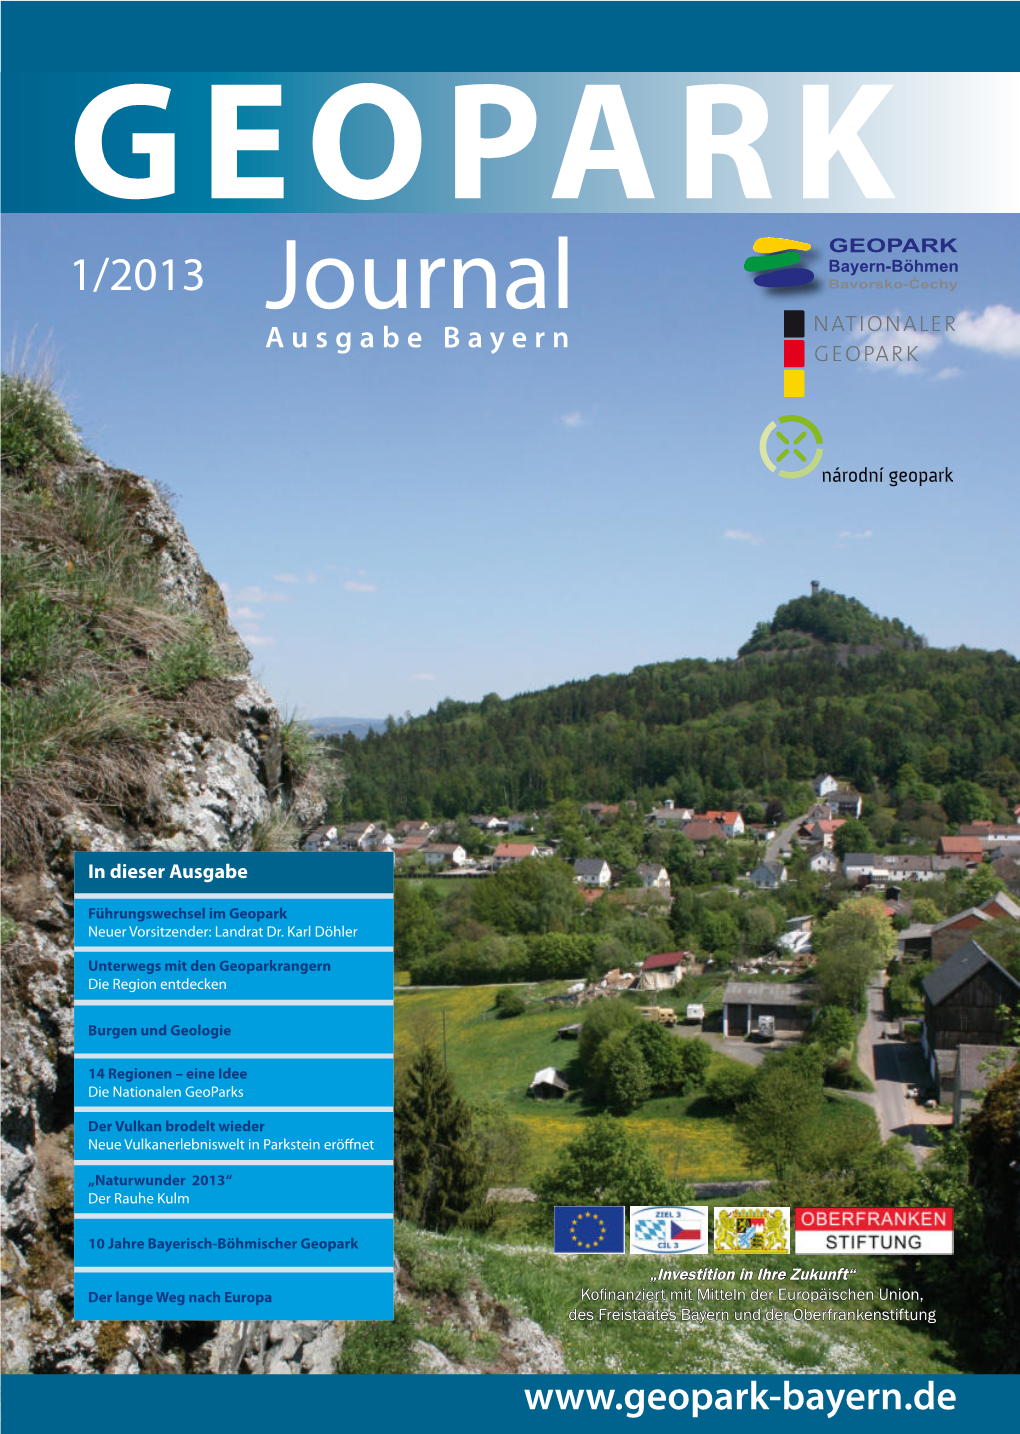 1/2013 Journal Ausgabe Bayern